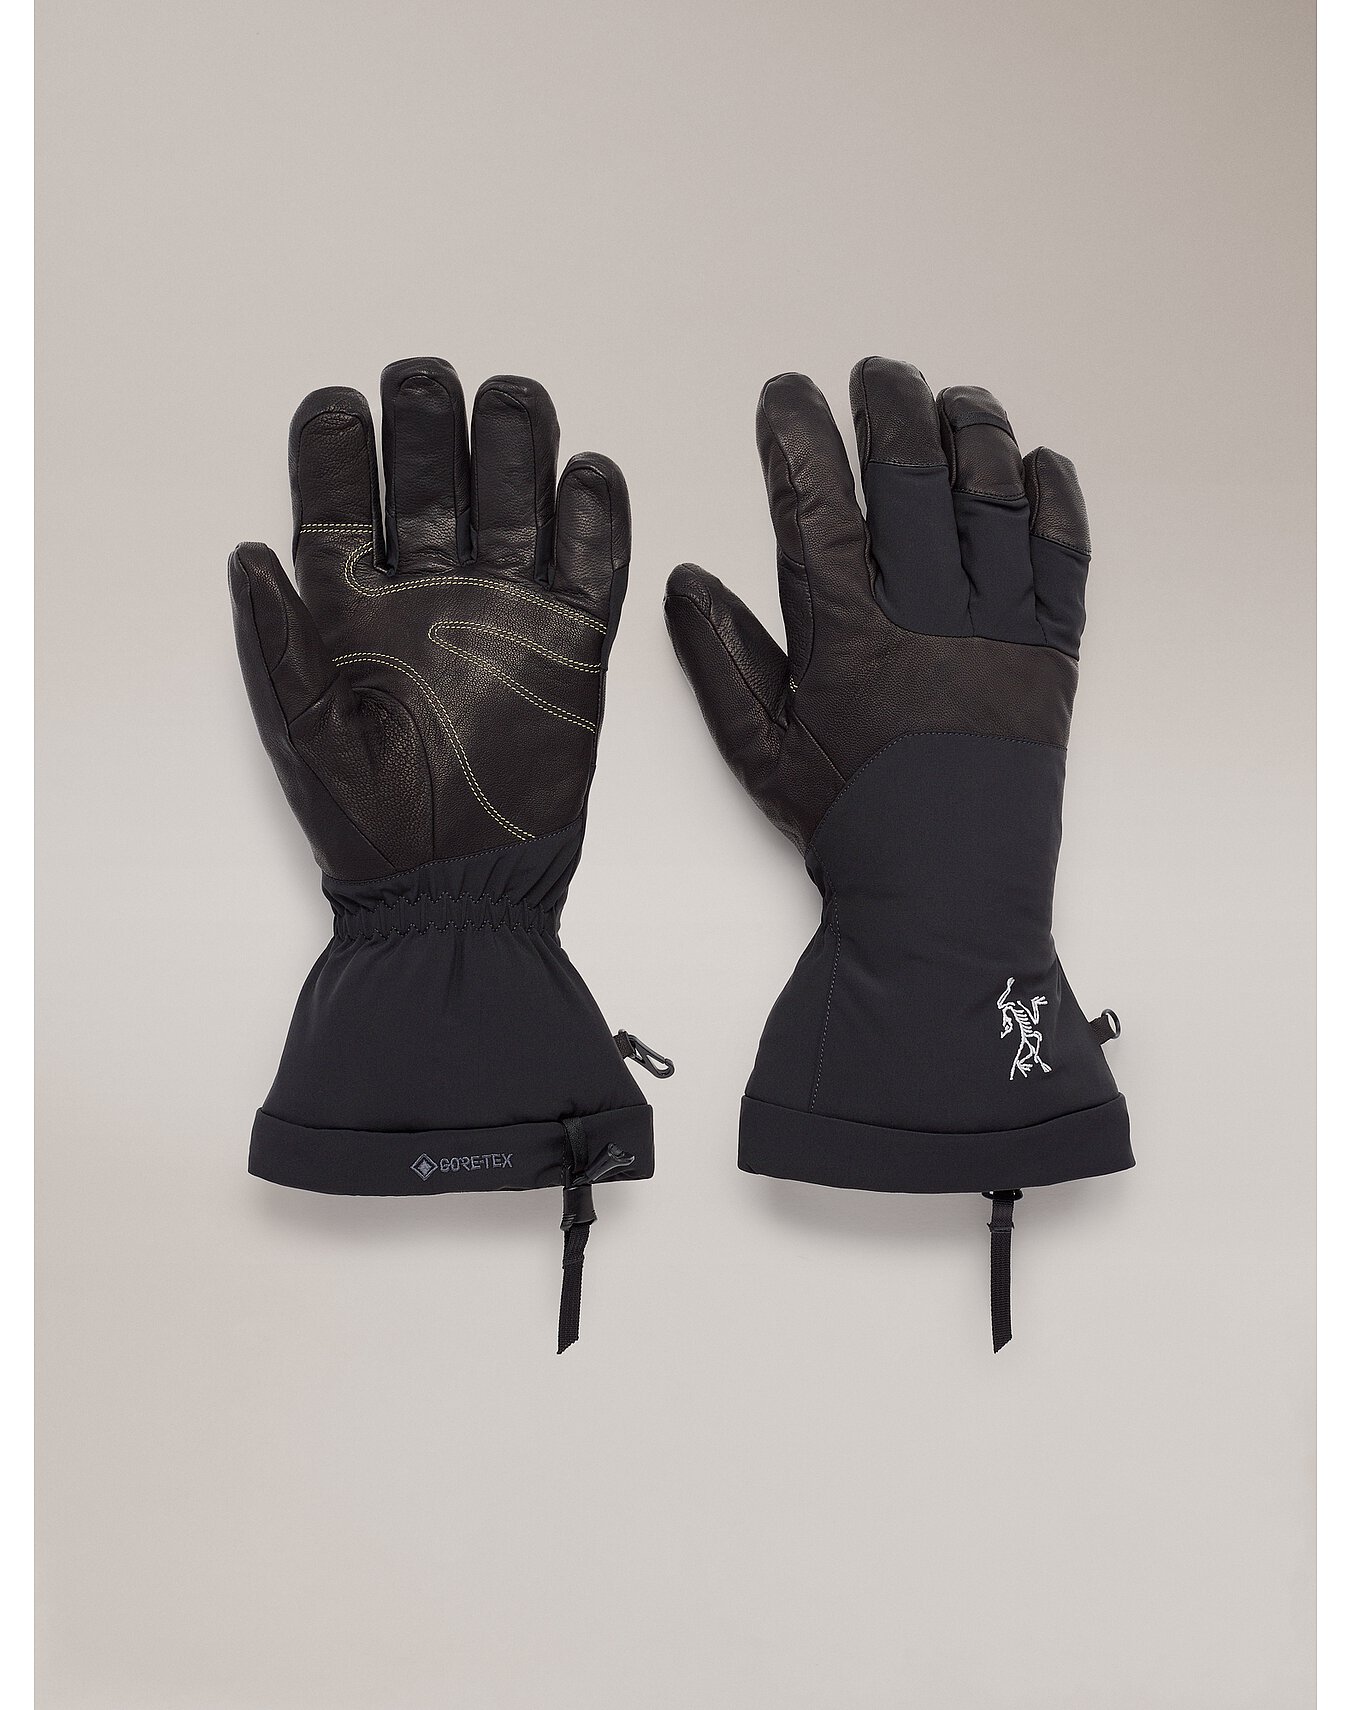 Fission SV Glove | Arc'teryx